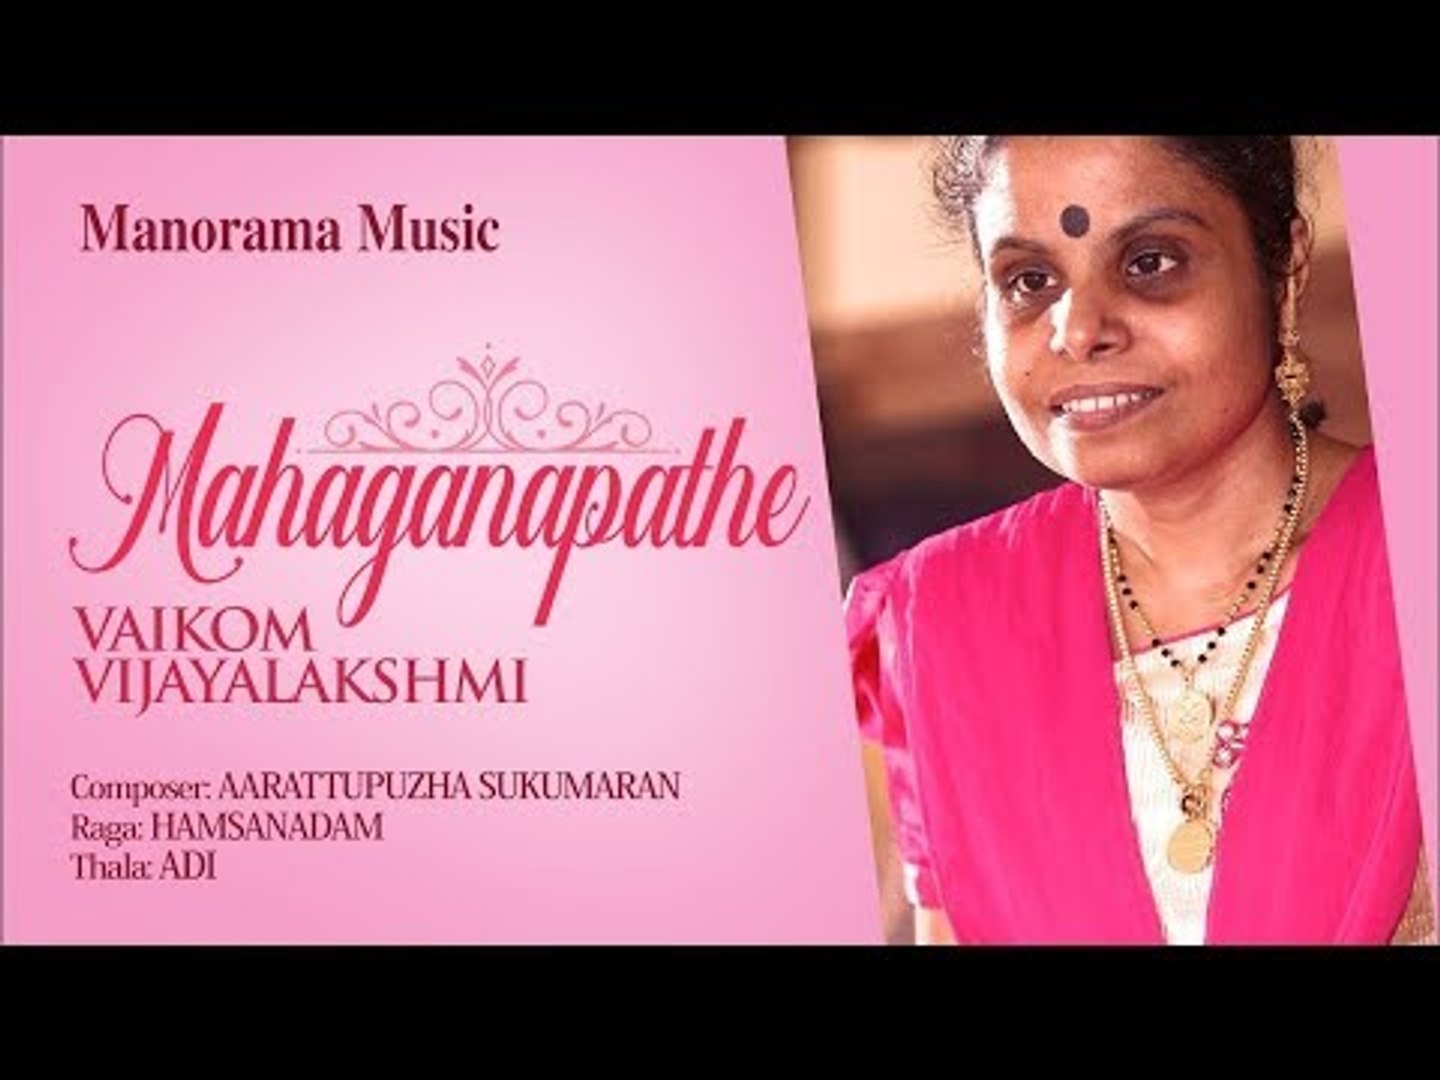 Mahaganapathe Vaikom Vijayalakshmi Aarattupuzha Sukumaran Video Dailymotion She is an expert in a rare musical instrument called gayatriveena. mahaganapathe vaikom vijayalakshmi aarattupuzha sukumaran